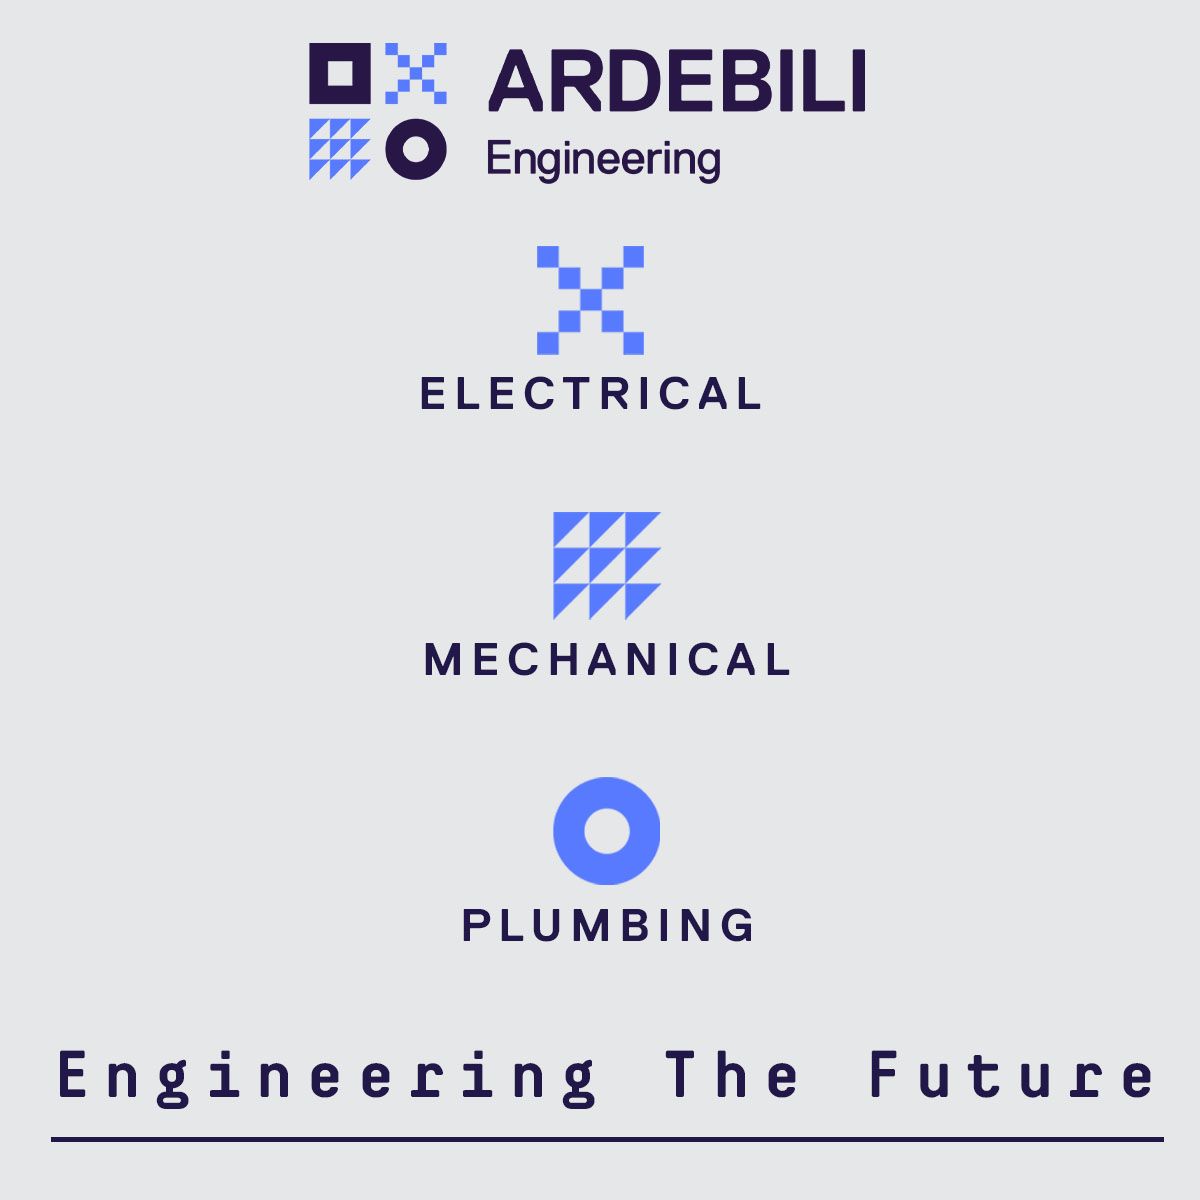 Ardebili Engineering Services